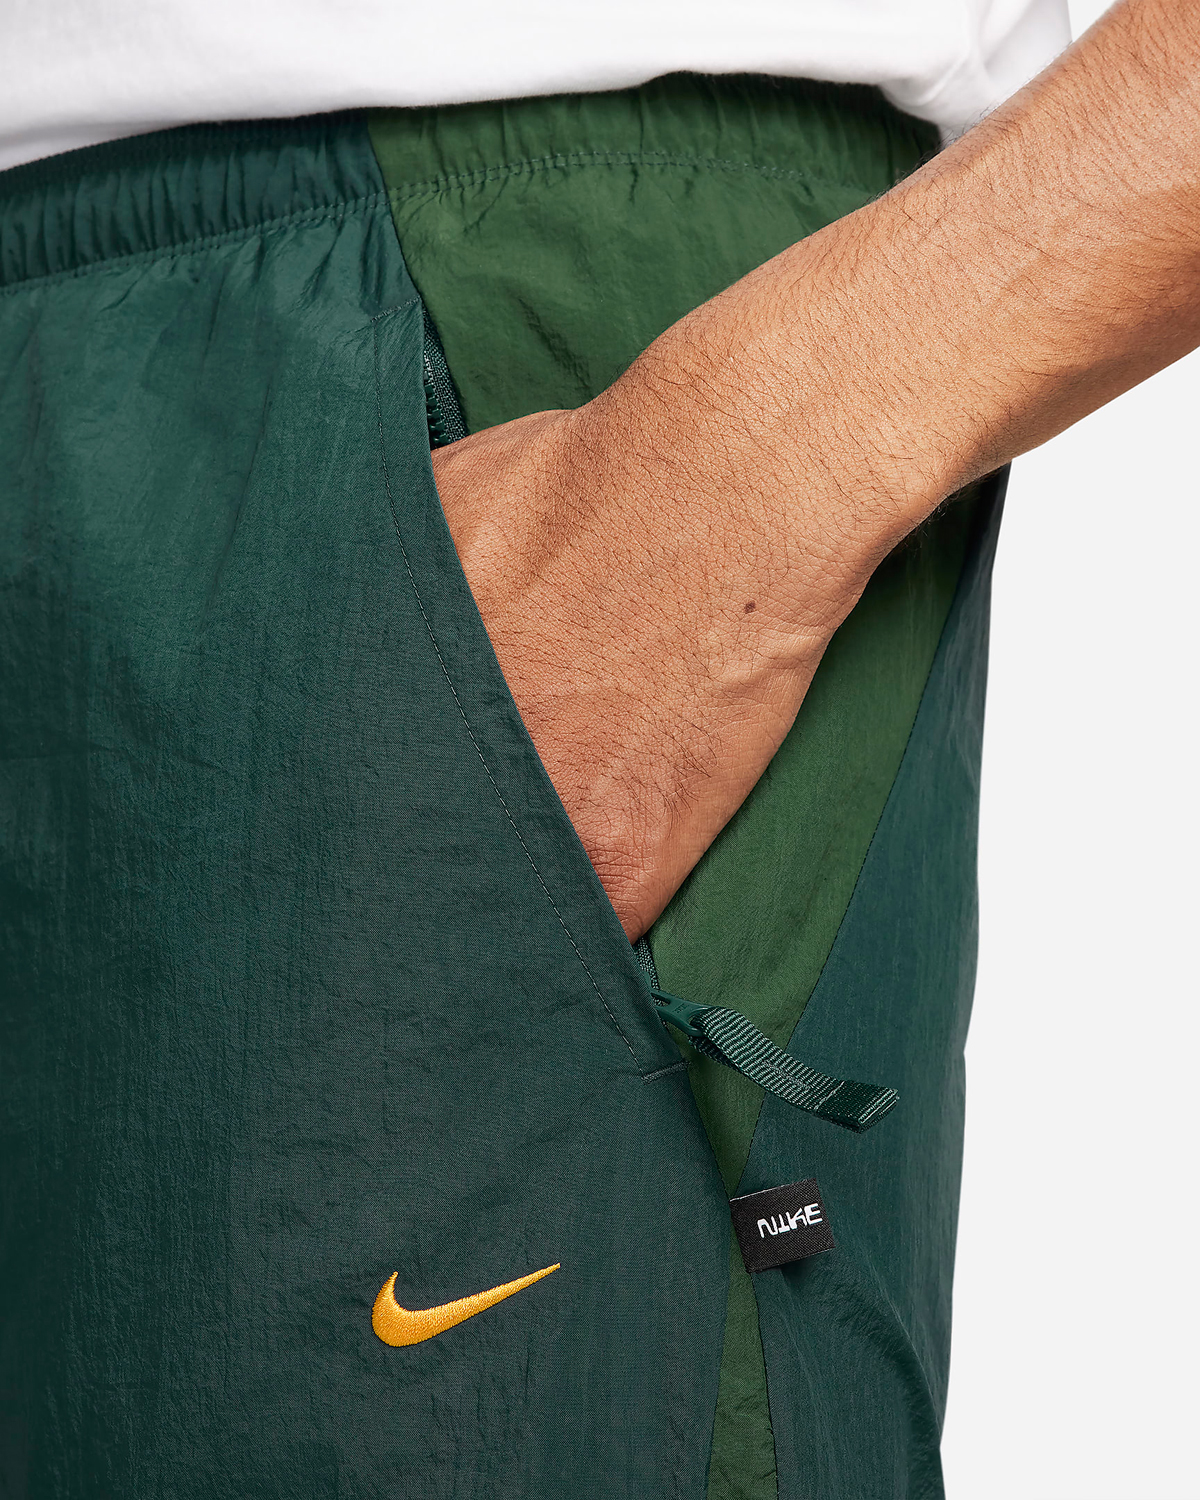 Nike Repel Culture of Football Soccer Top Pants Deep Jungle Sundial 2